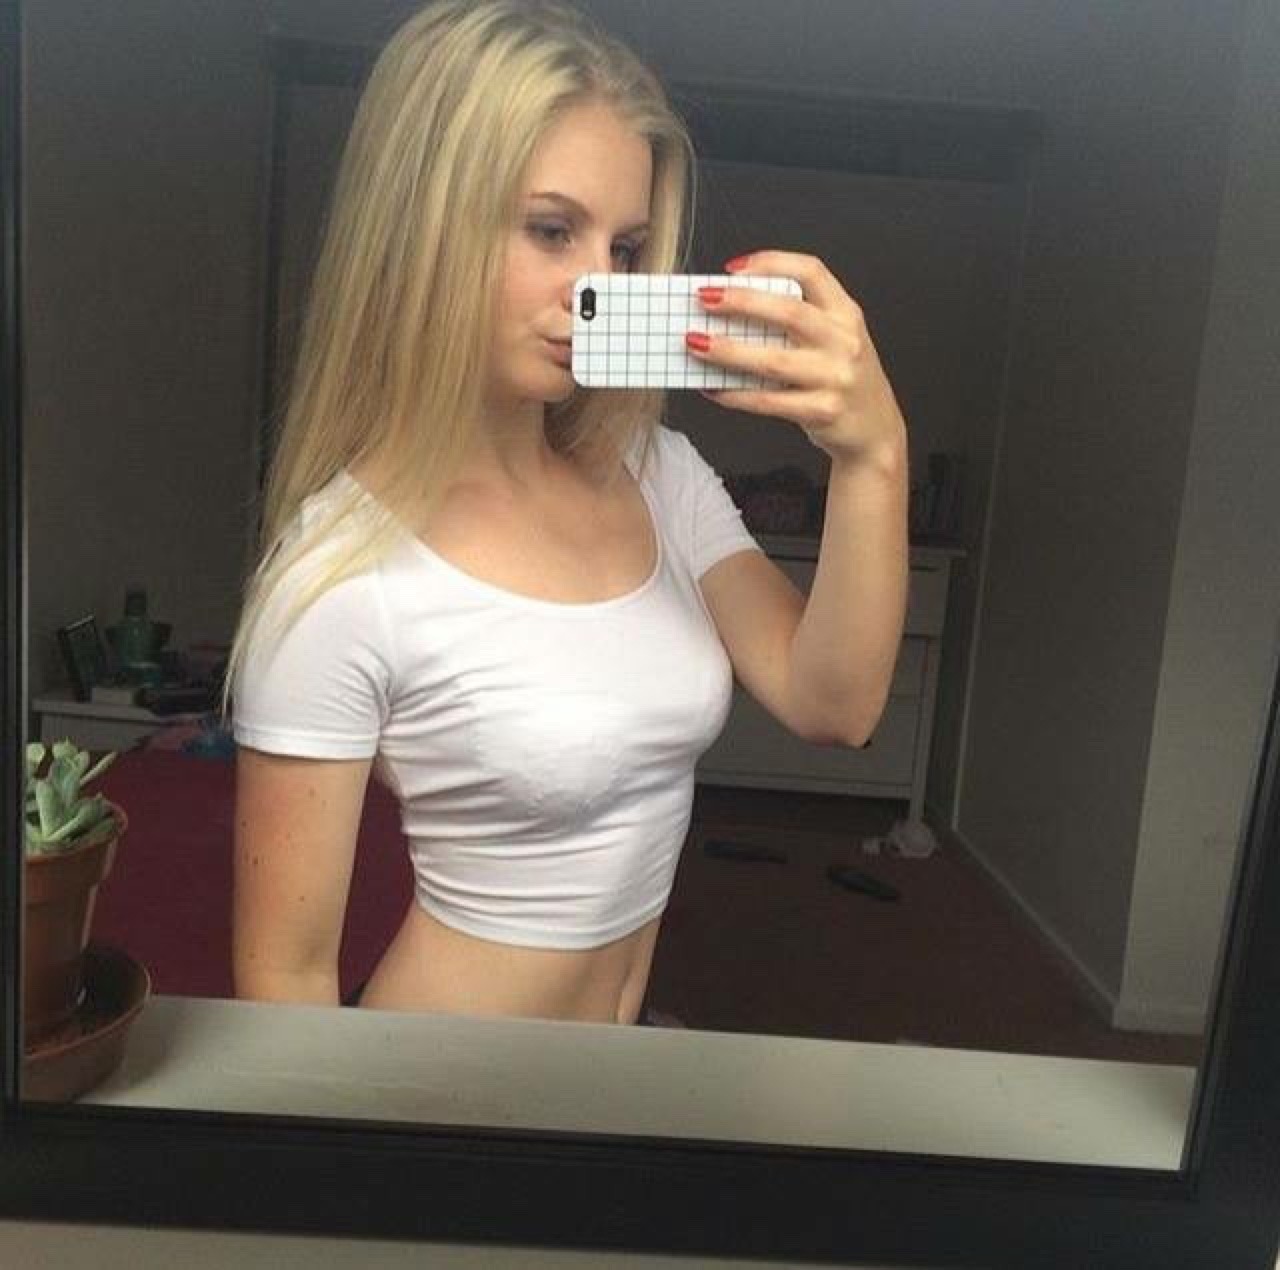 cov-girl-selfies:  Name is Lucy Wells